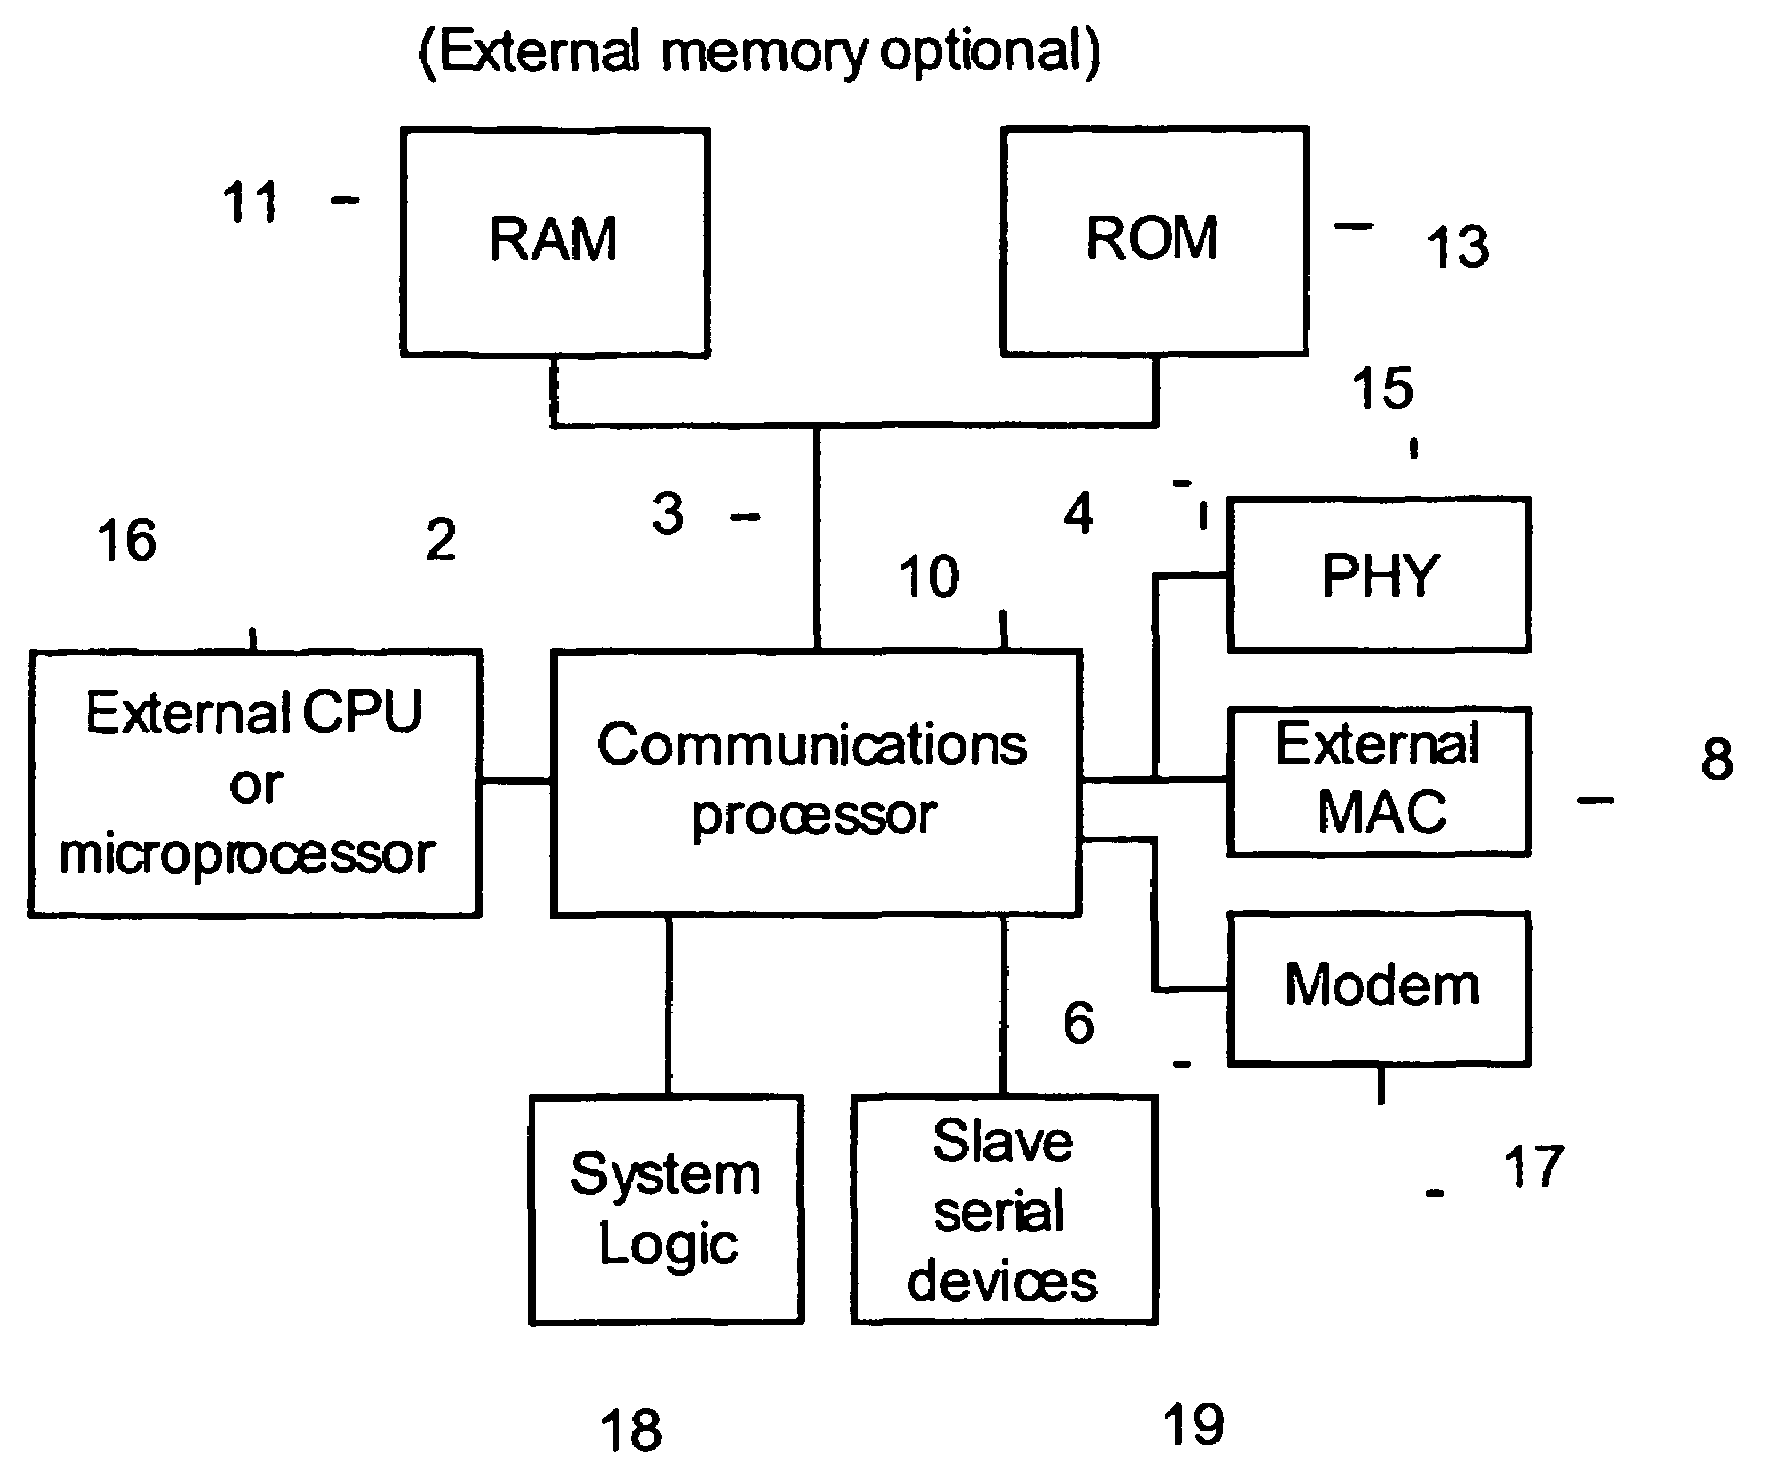 Communications processor